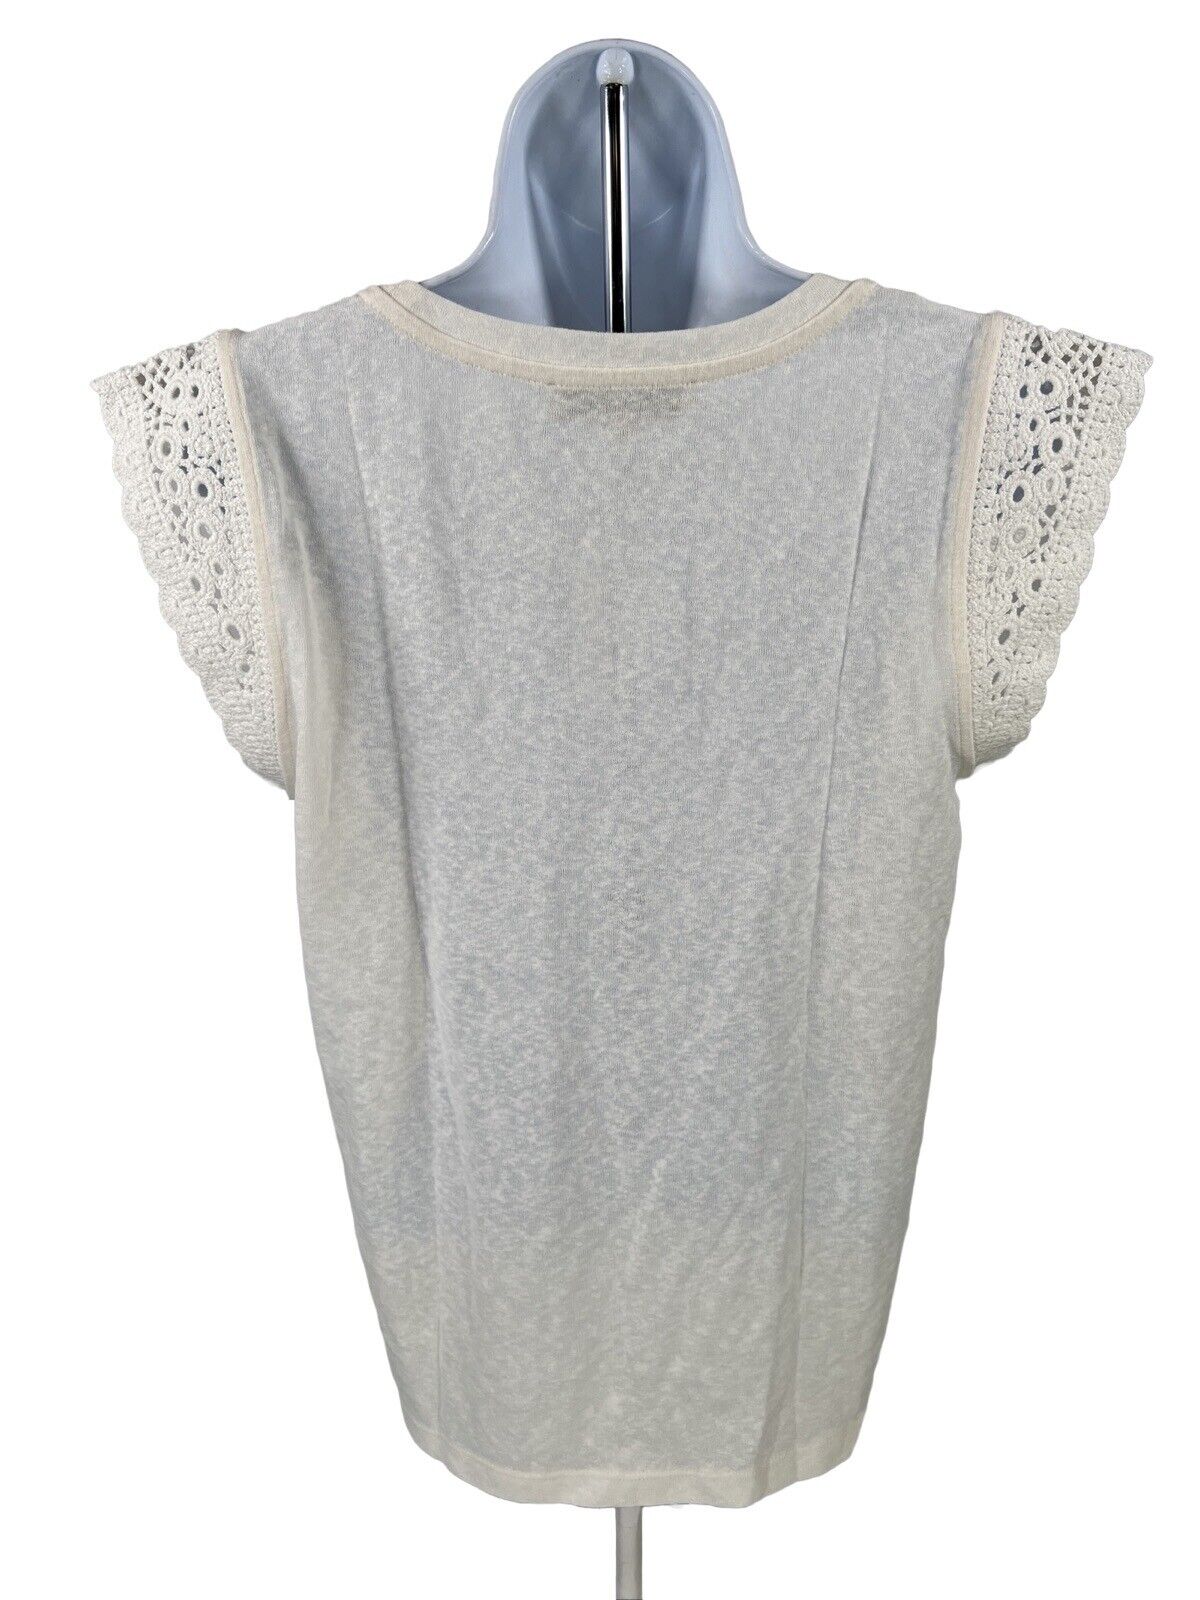 NEW Loft Women's Ivory Crochet Semi-Sheer T-Shirt - M